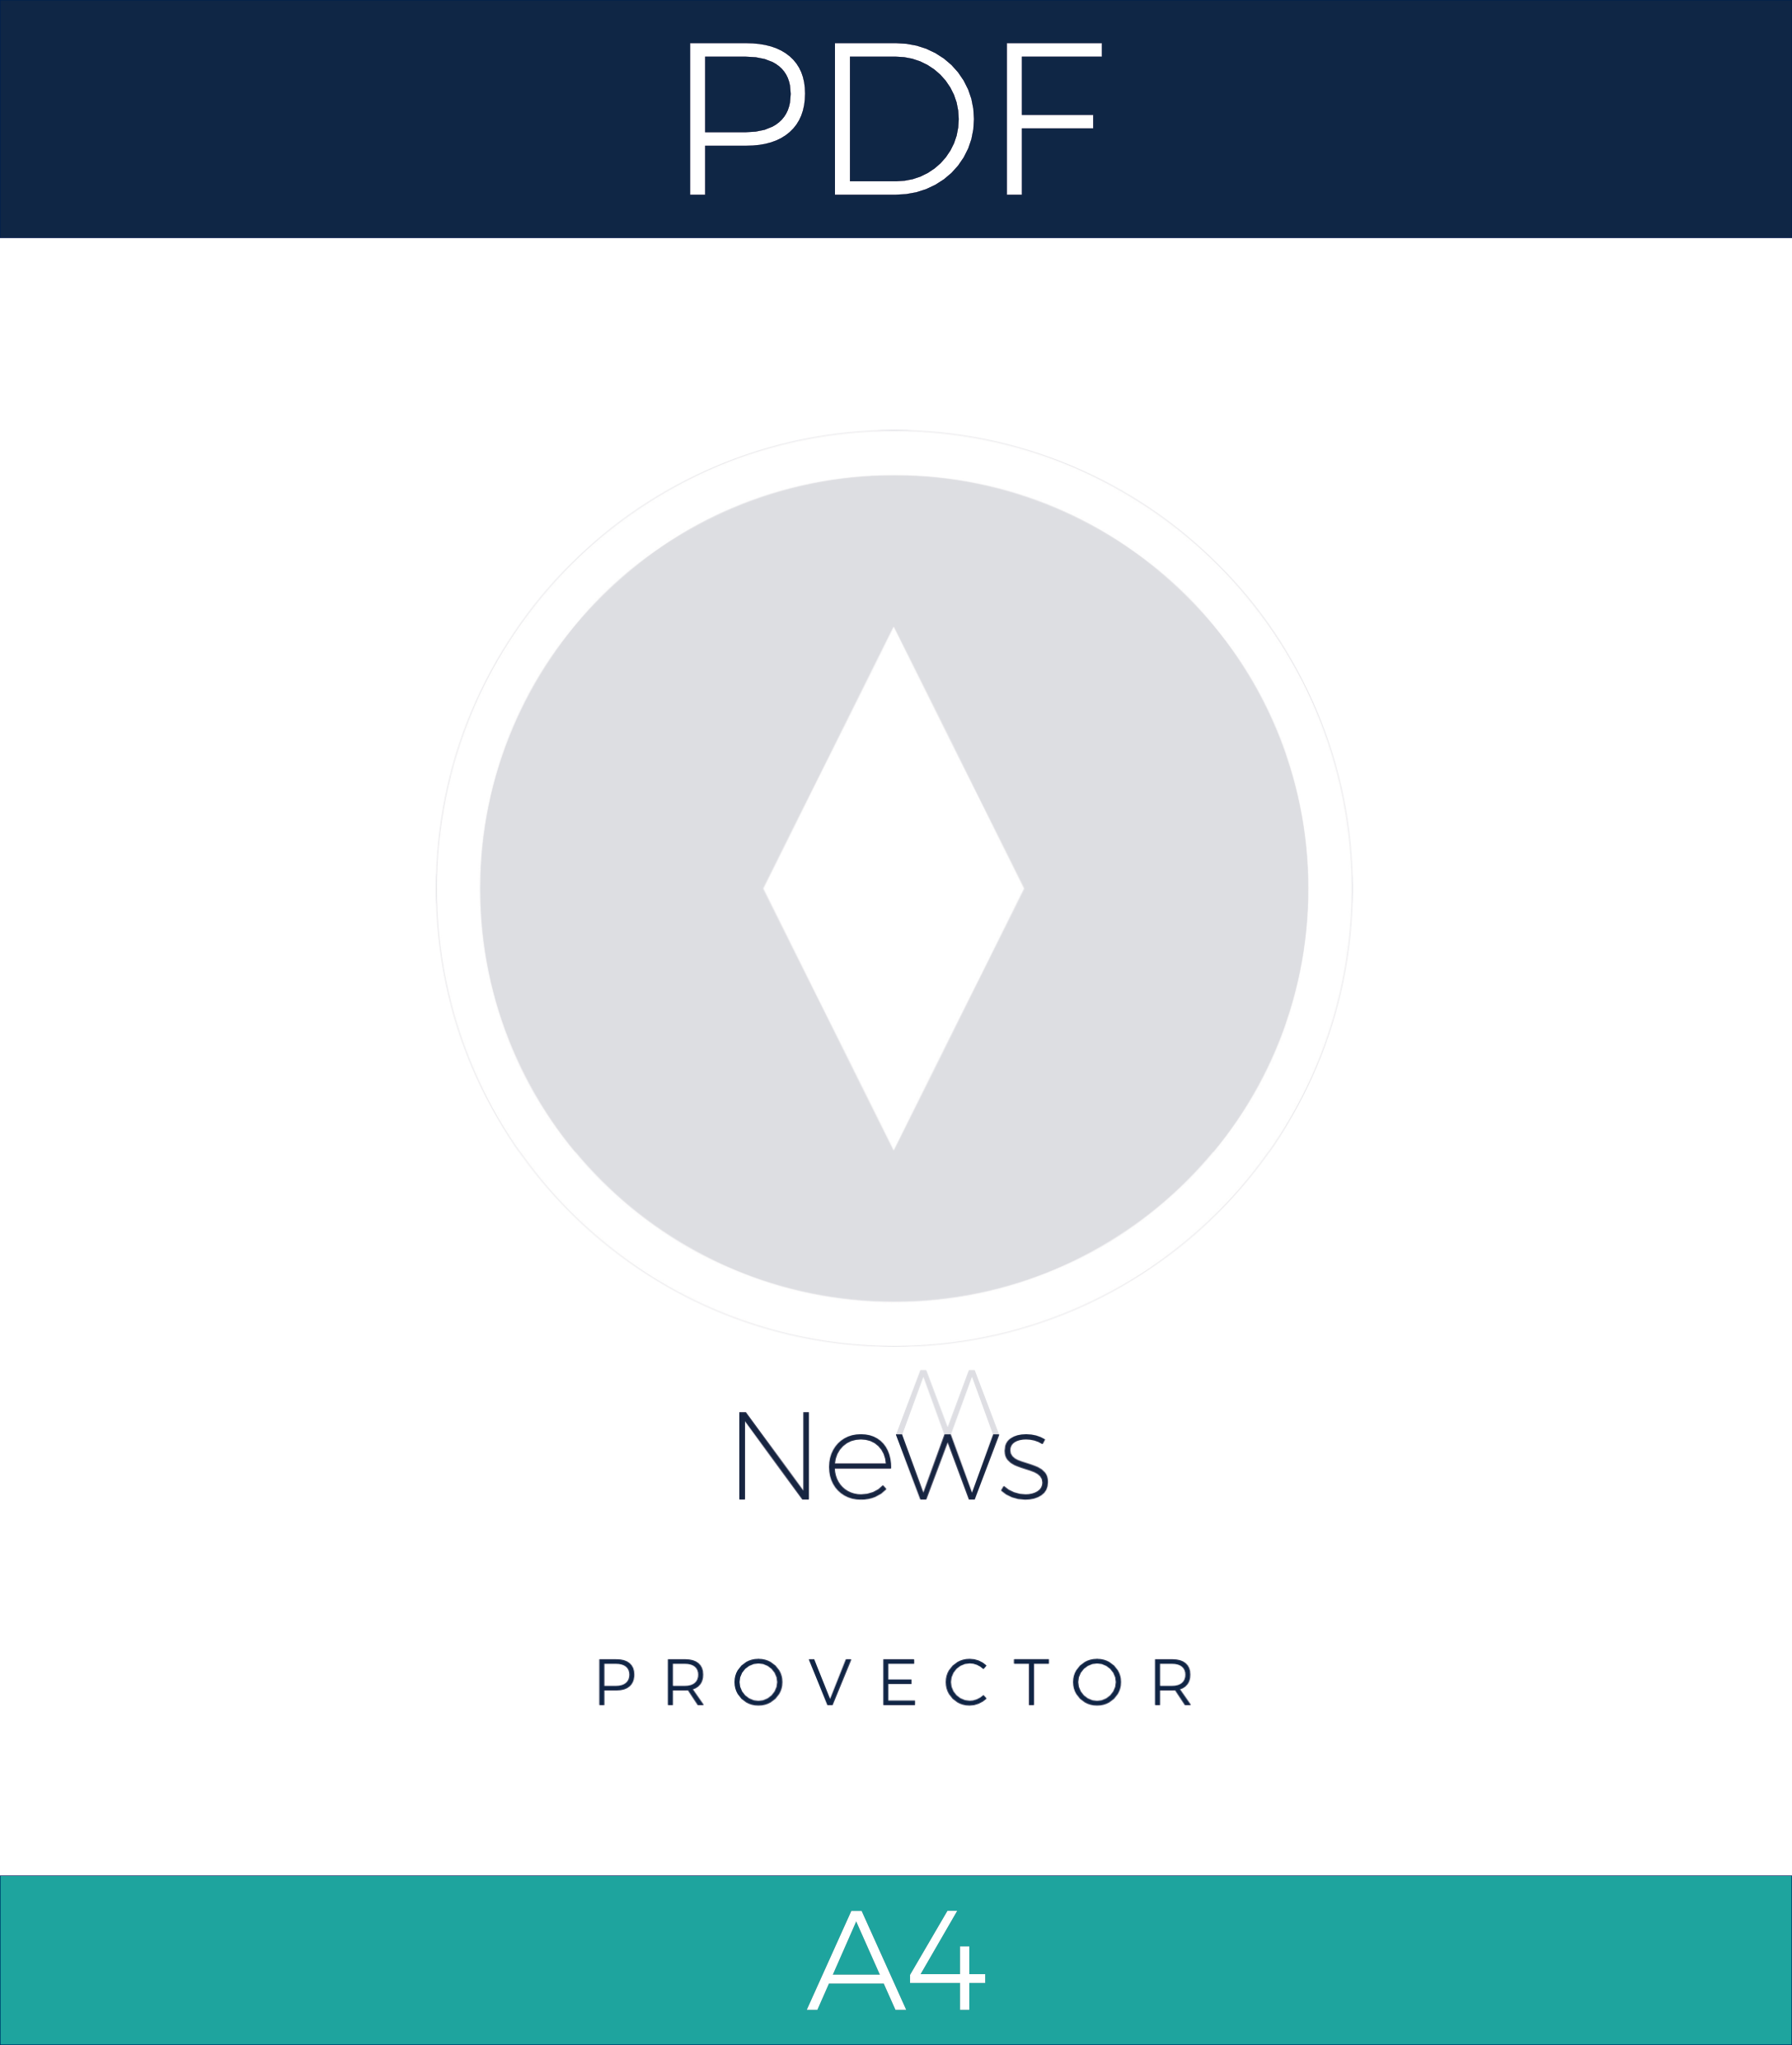 Provector - Printer Friendly PDF - A4